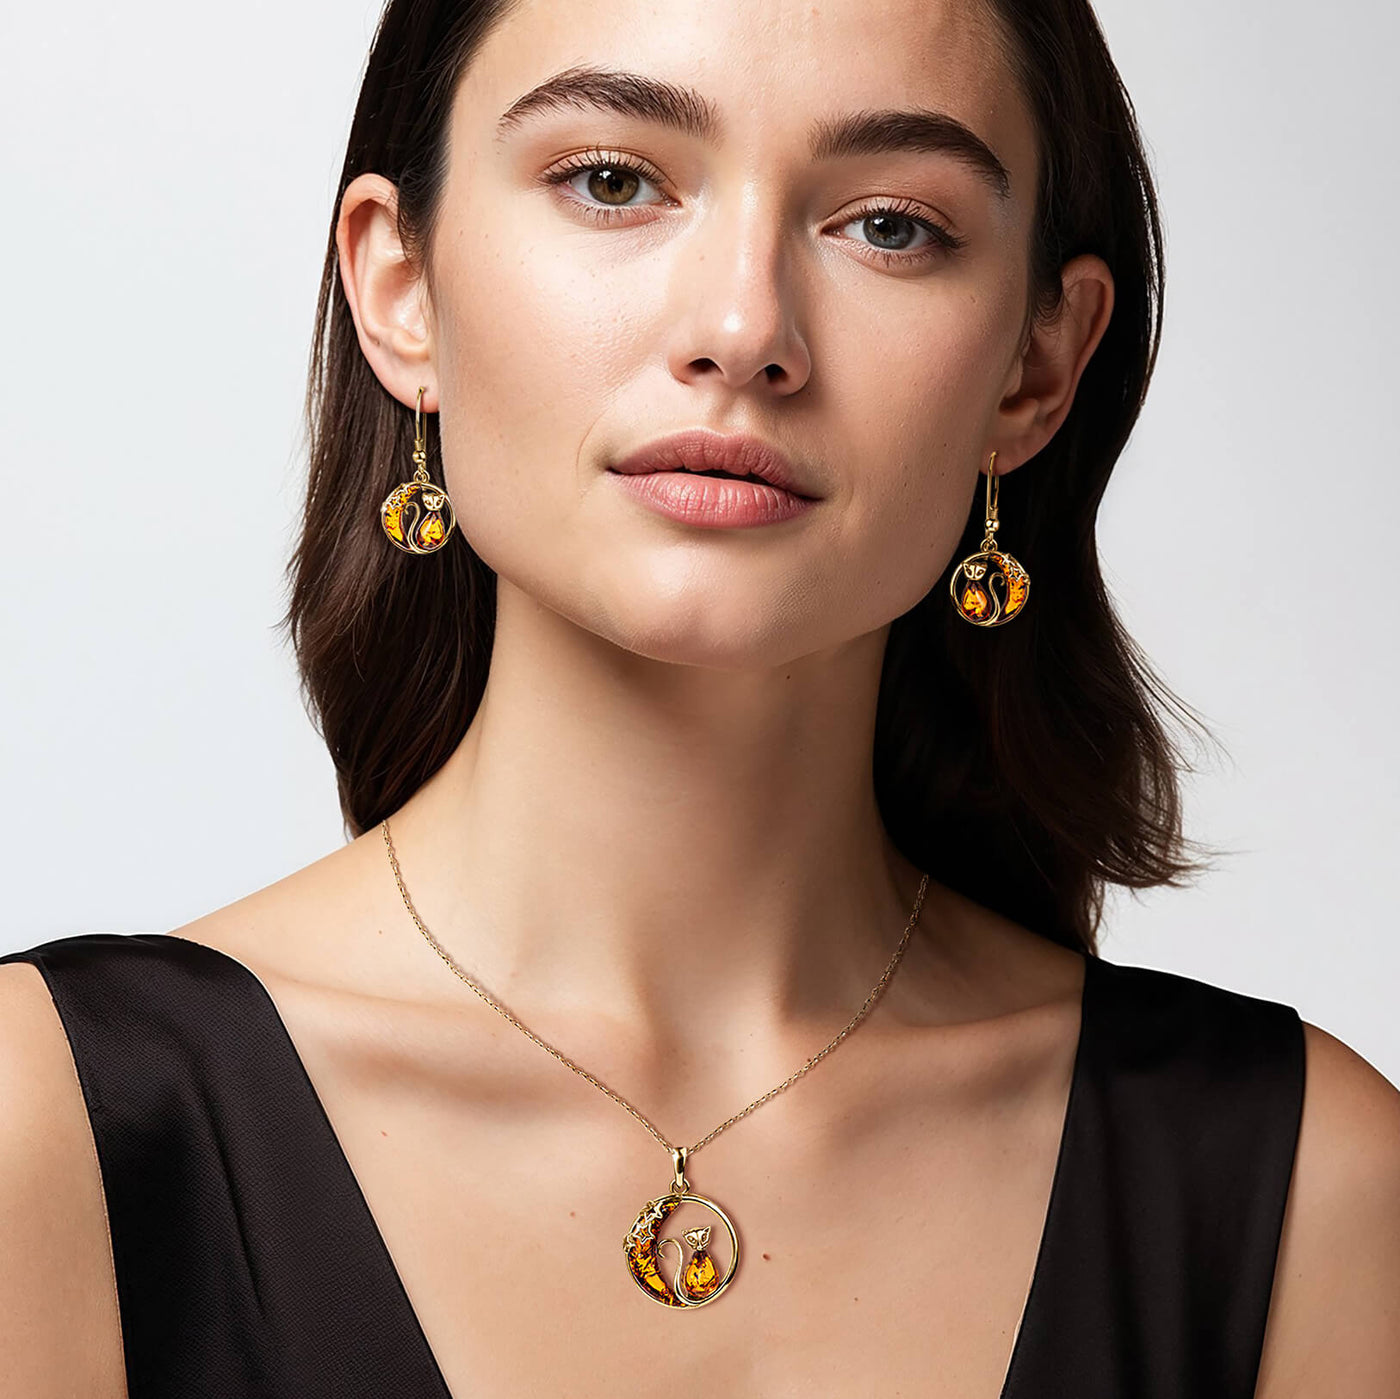 Women wearing amber cat jewelry